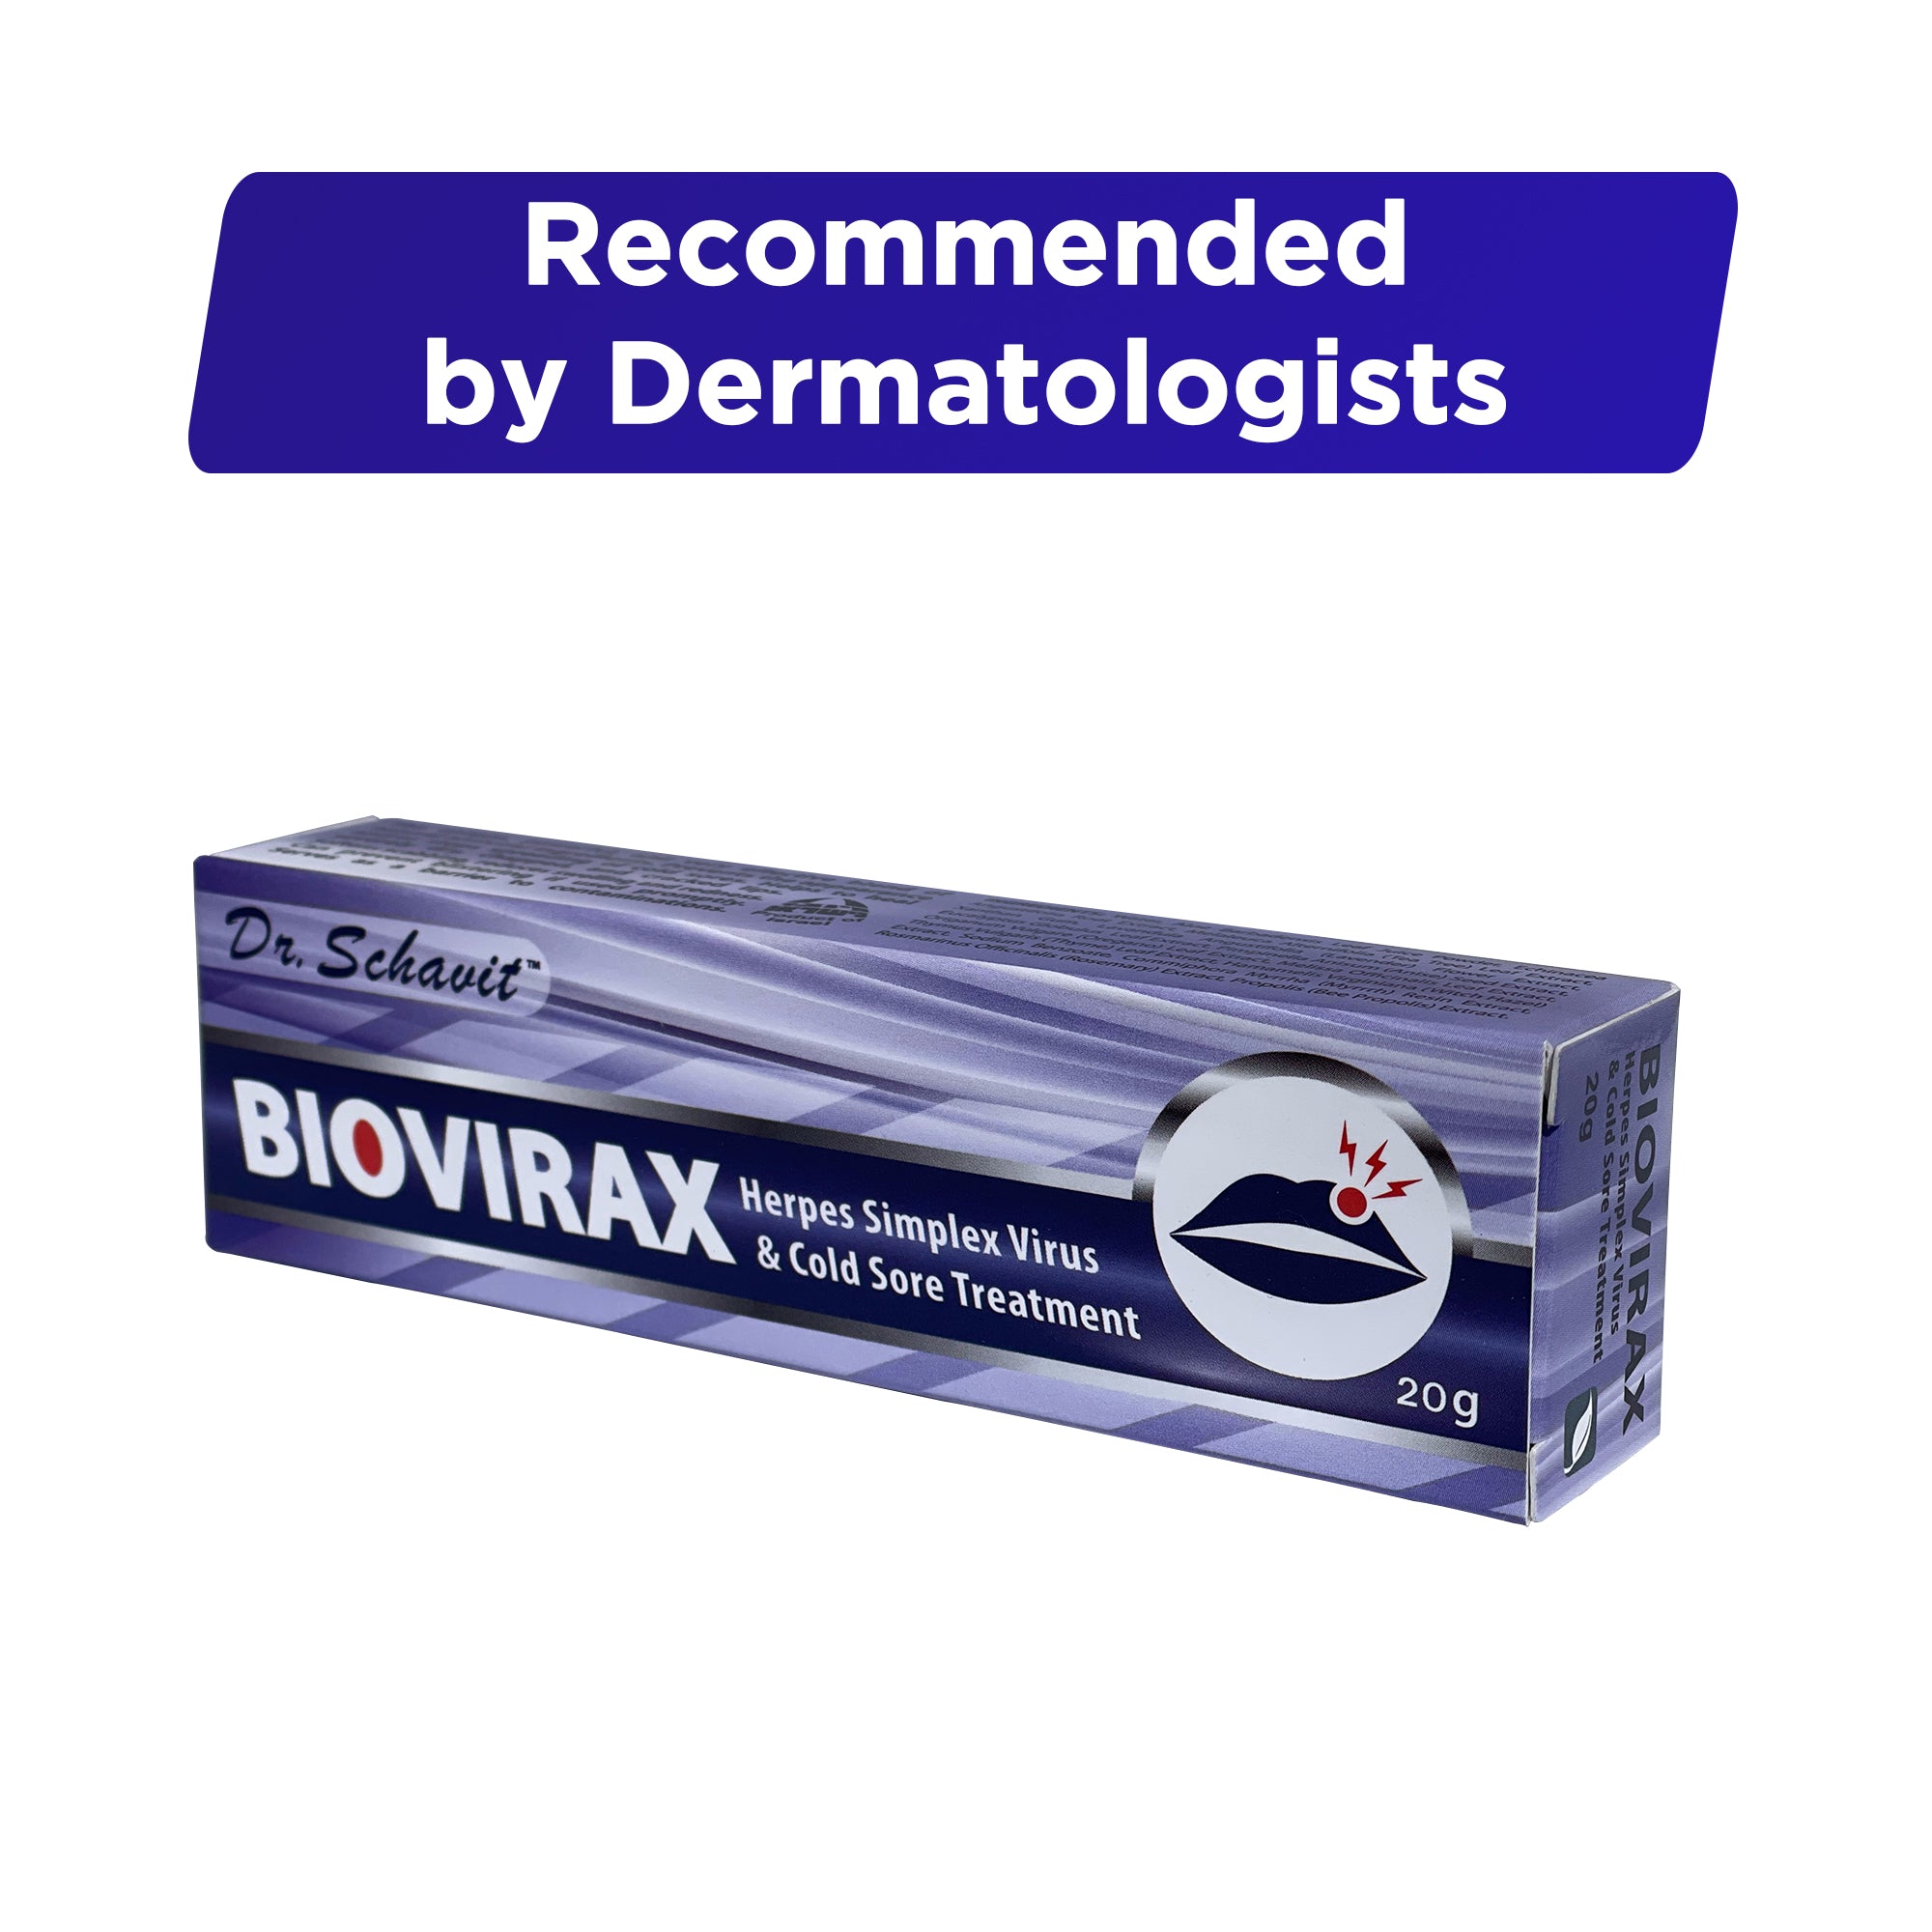 DR. SCHAVIT BioVirax Cold Sore Treatment – Natural Healing Cream